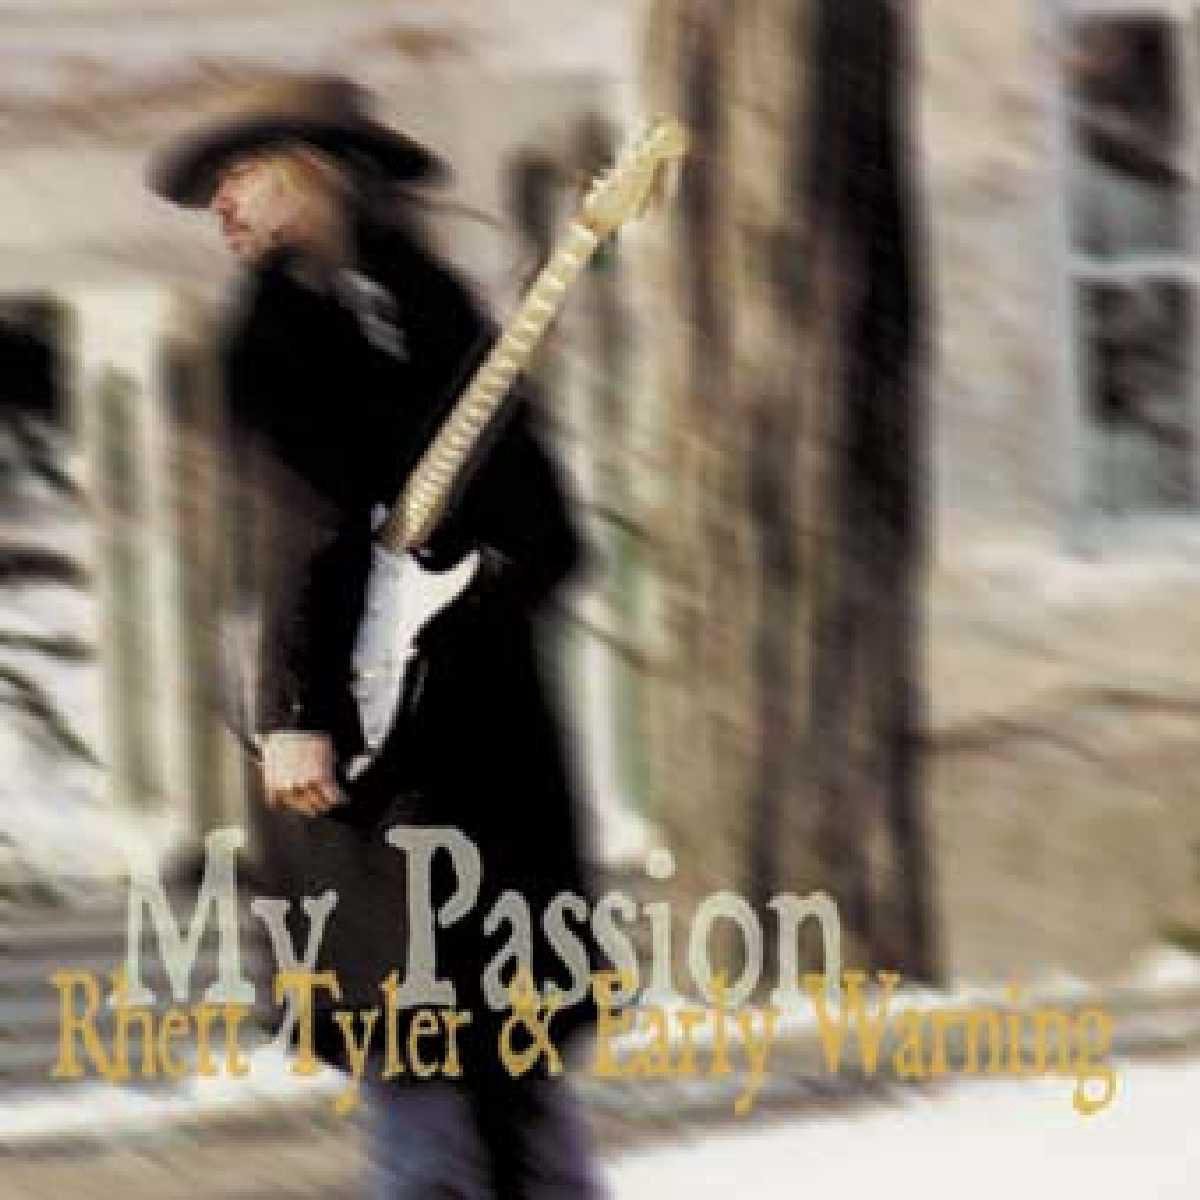 Rhett Tyler & Early Warning - My Passion in DTS-HD (op speciaal verzoek)